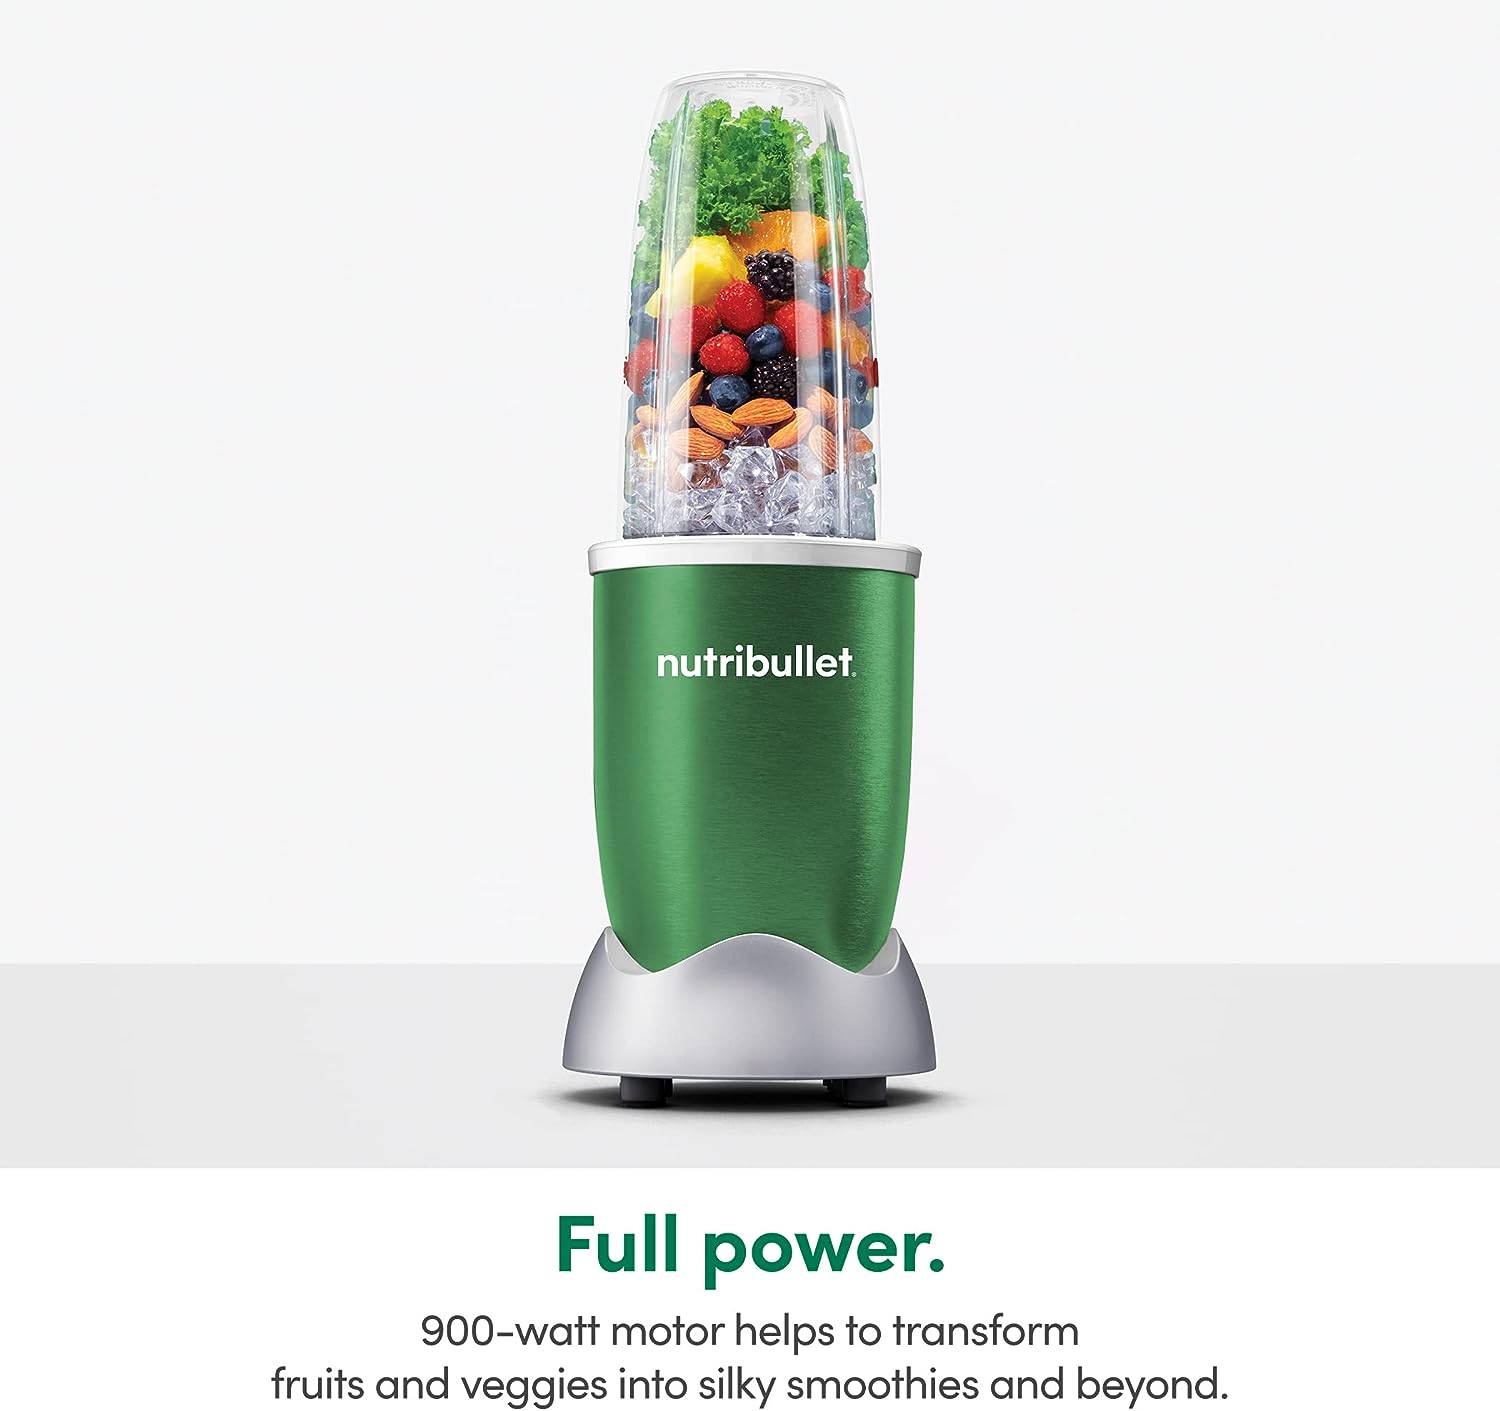 Meet the nutribullet Juicer & Juicer Pro - nutribullet